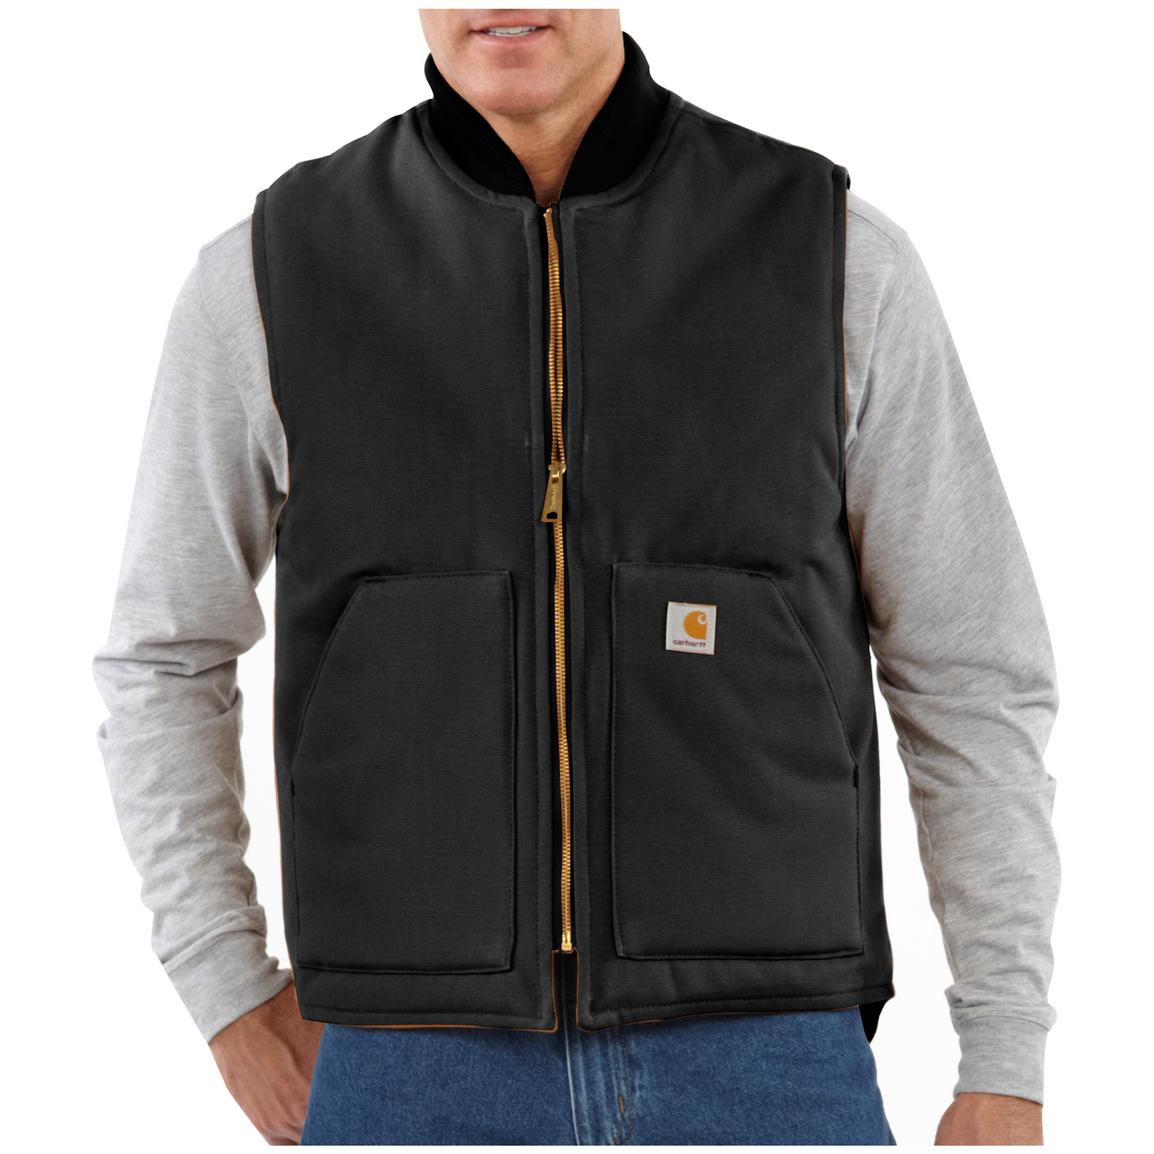 Carhartt® Arctic Quilt Lined Duck Vest - 108355, Vests at Sportsman's Guide